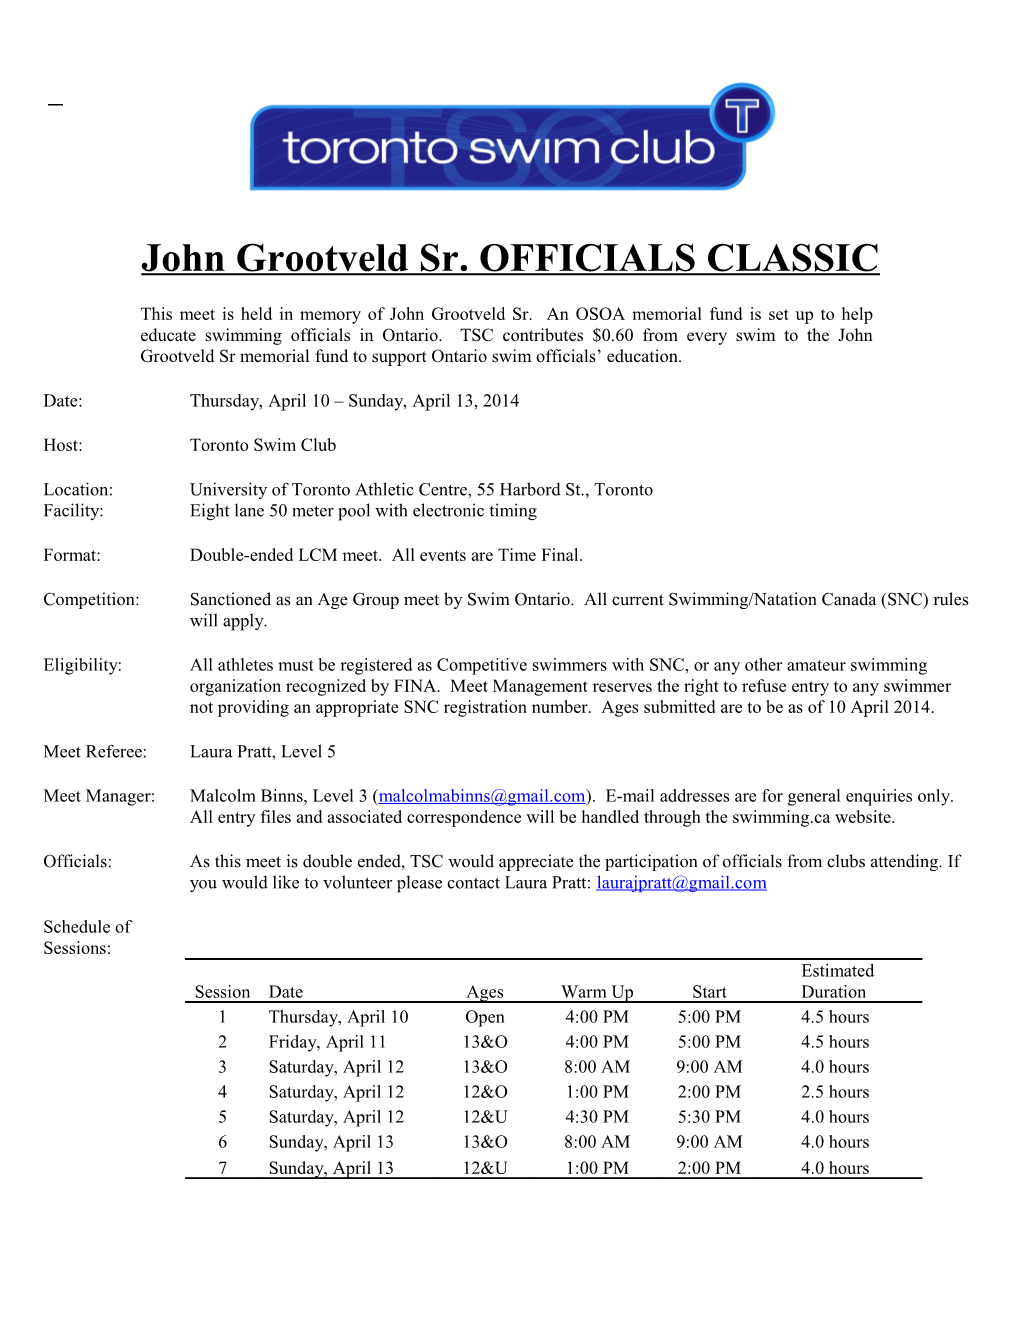 John Grootveld Sr Memorial Swim Meet